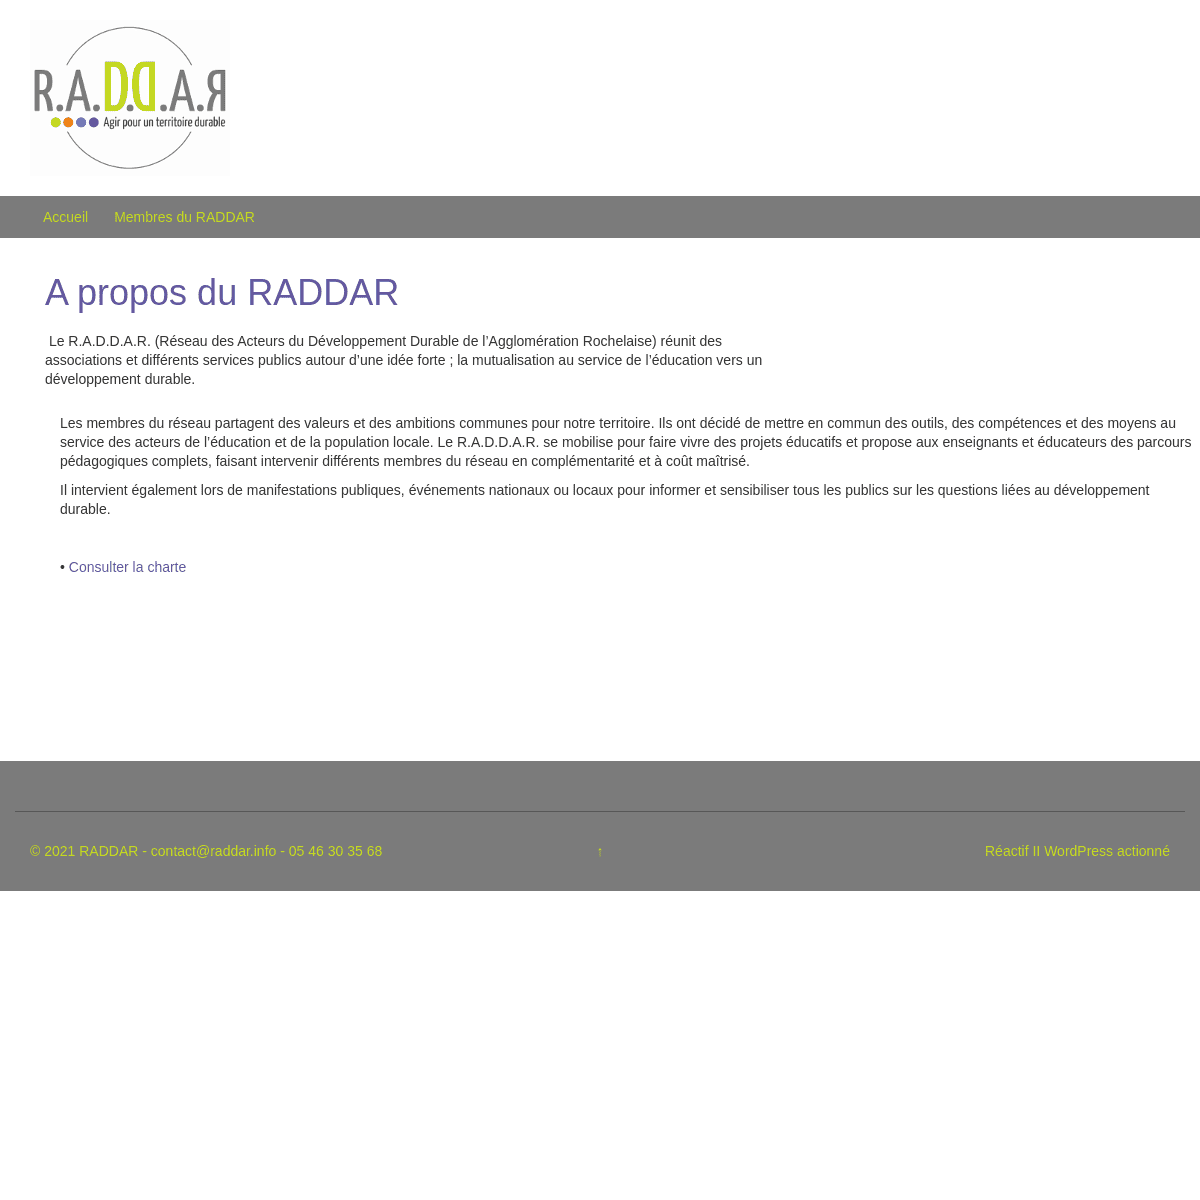 A complete backup of https://raddar.info